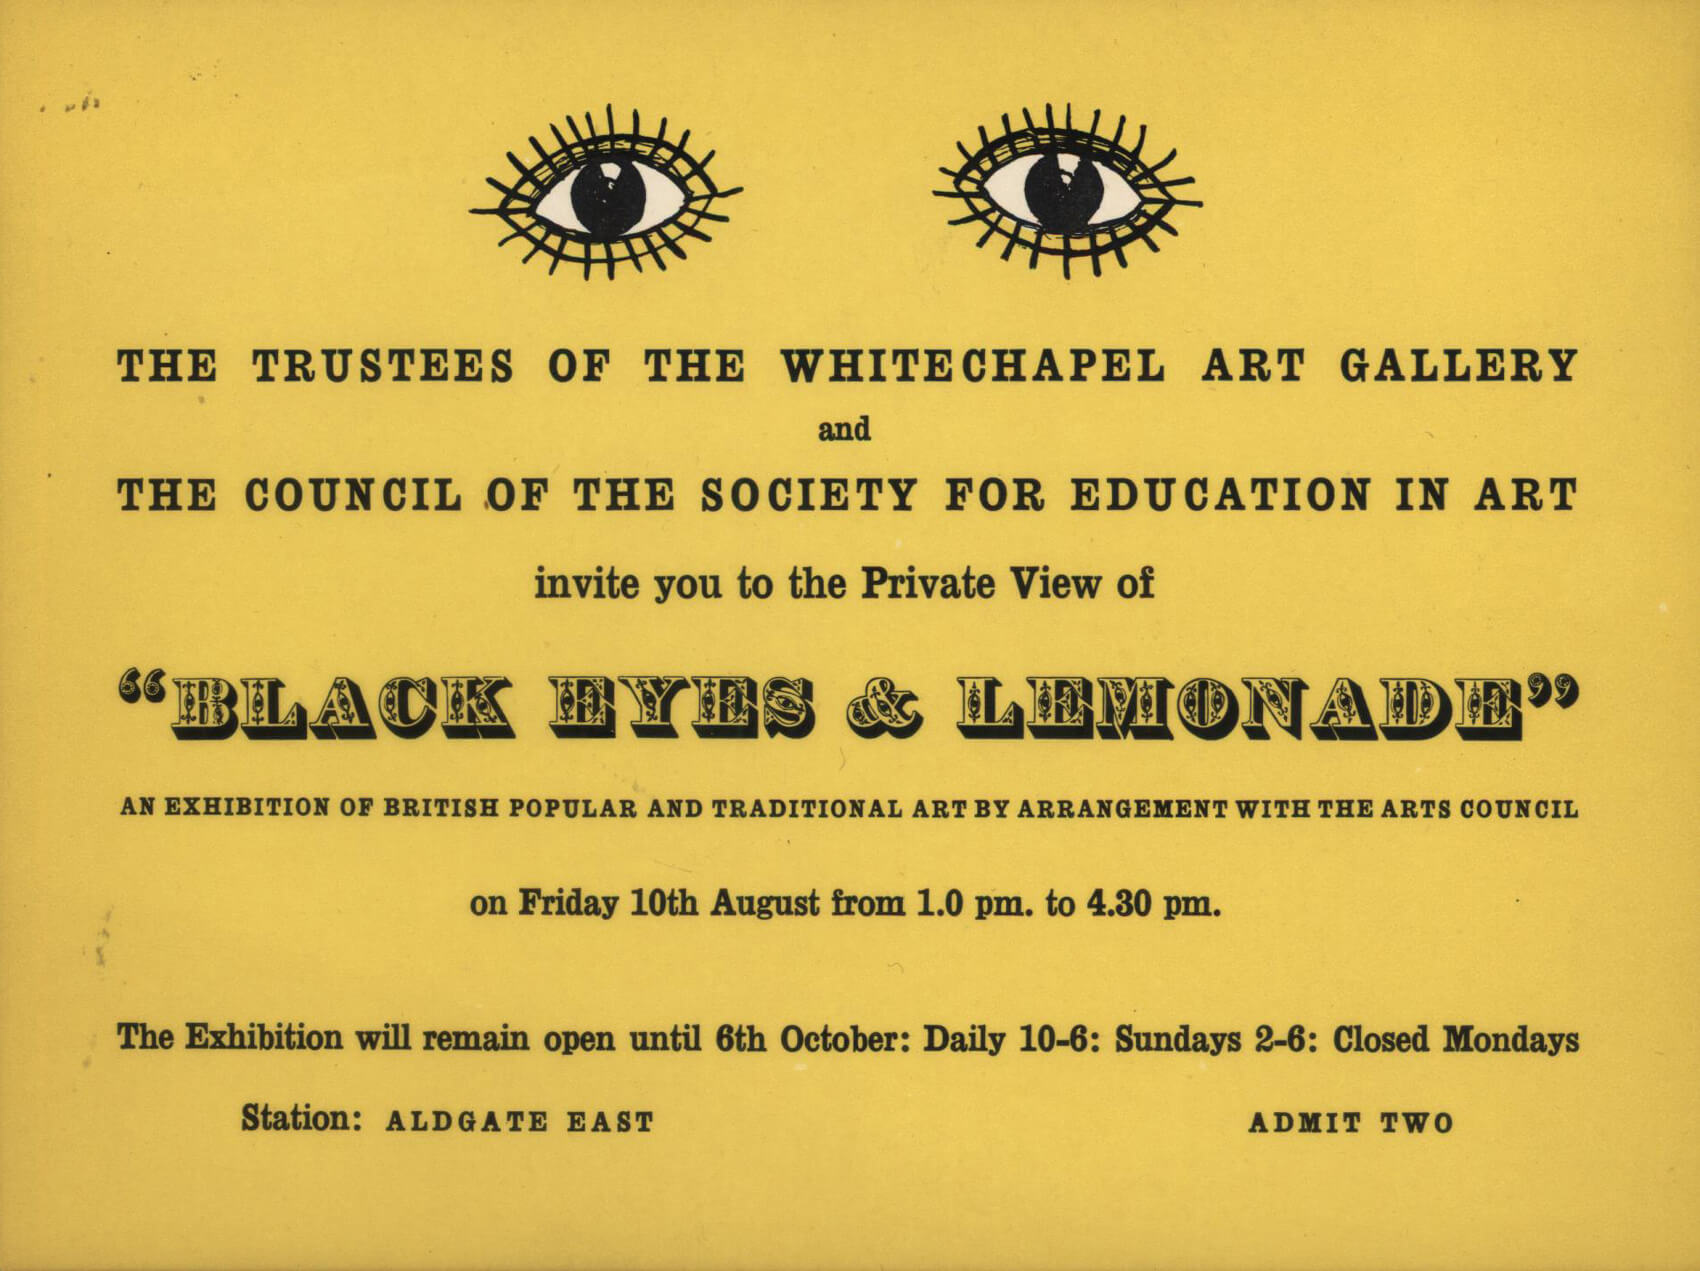 Barbara Jones - Black Eyes & Lemonade invitation card private view